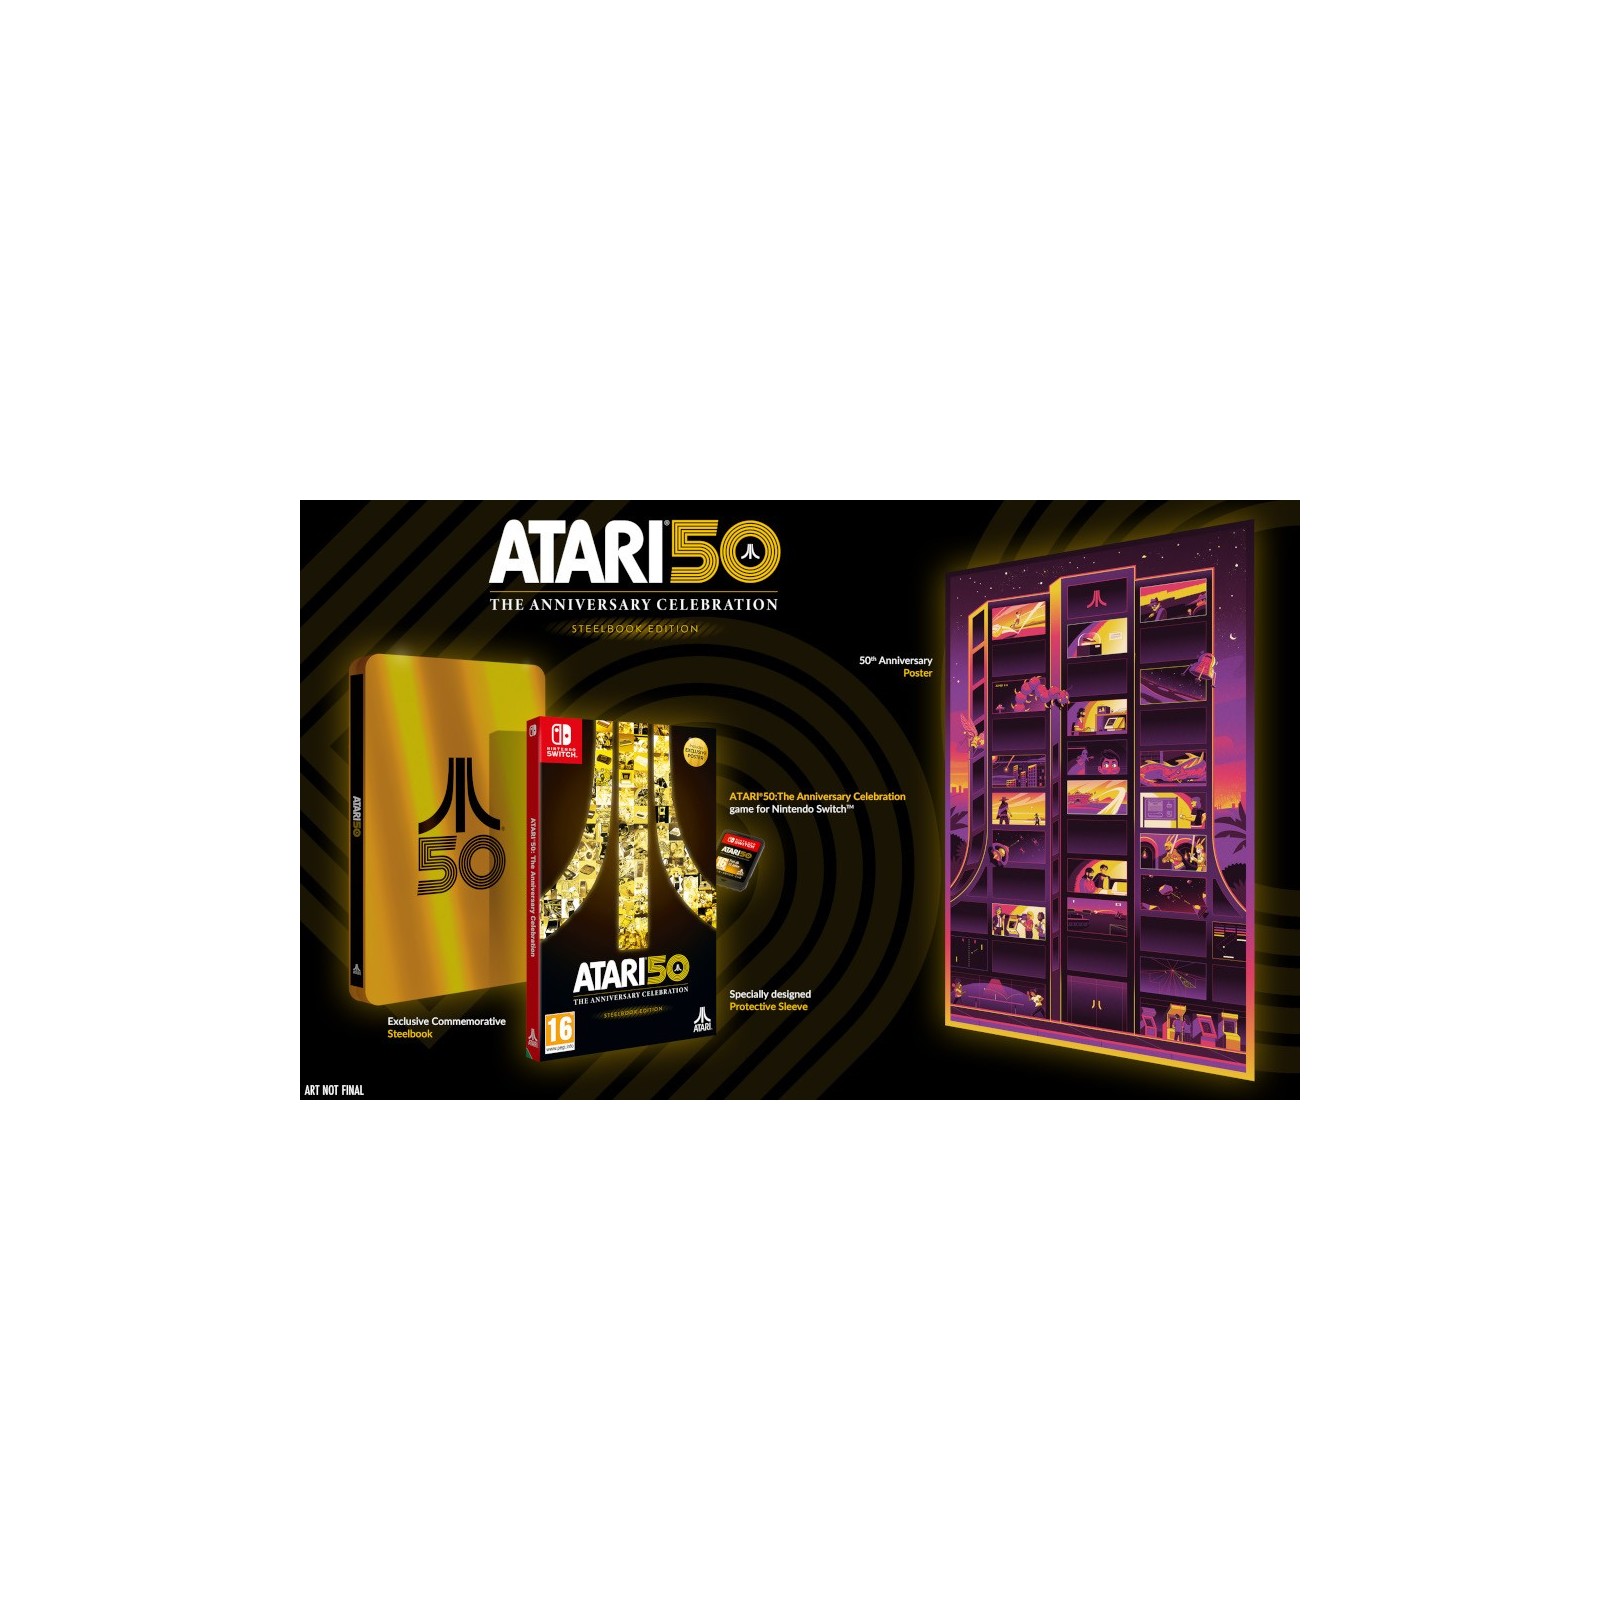 ATARI 50: THE ANNIVERSARY COLLECTION STEELBOOK EDITION